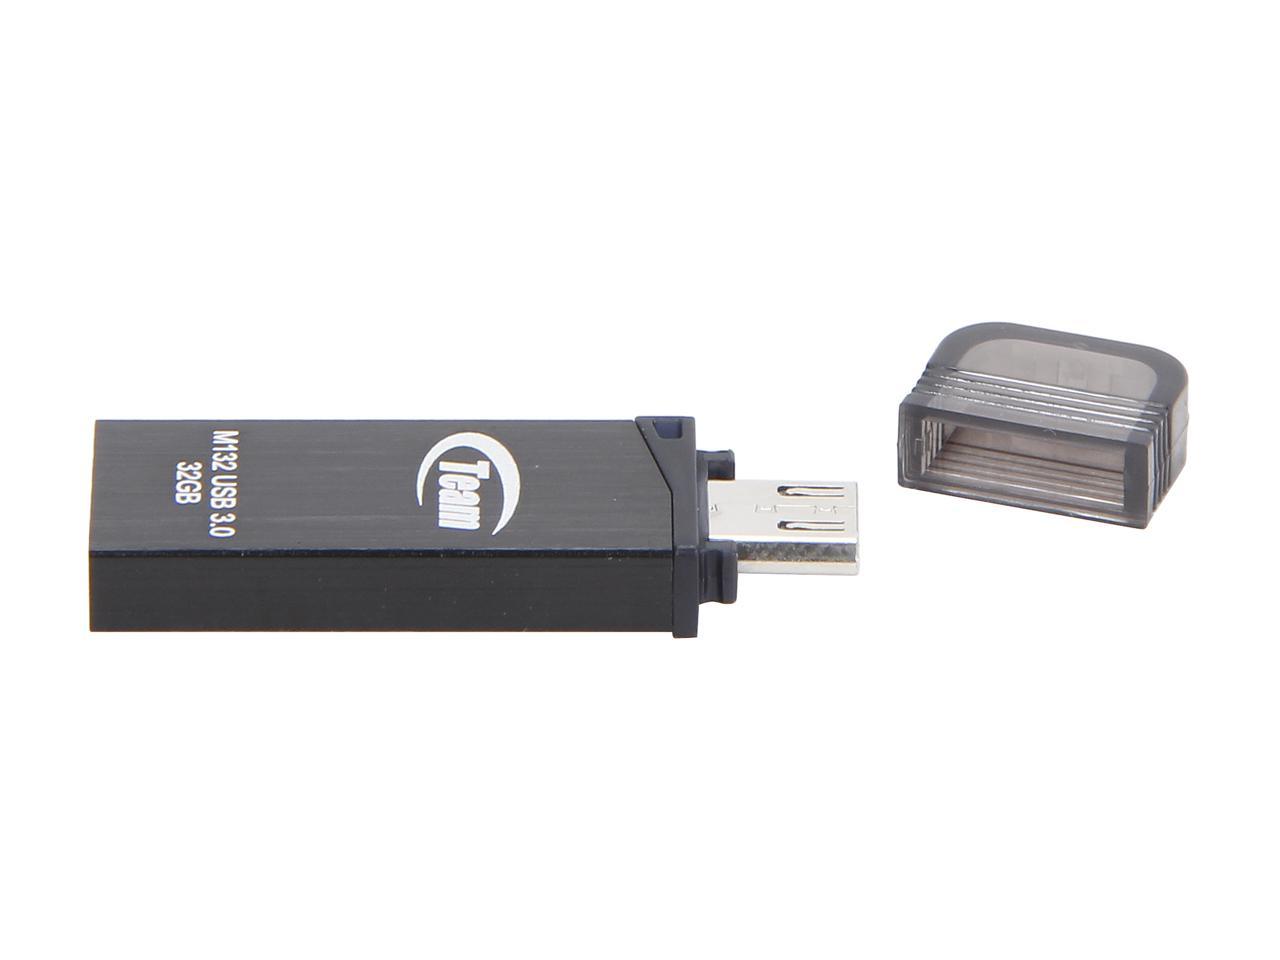 Team M132 32GB USB 3.0 Flash Drive With OTG Support Model TM13232GB01